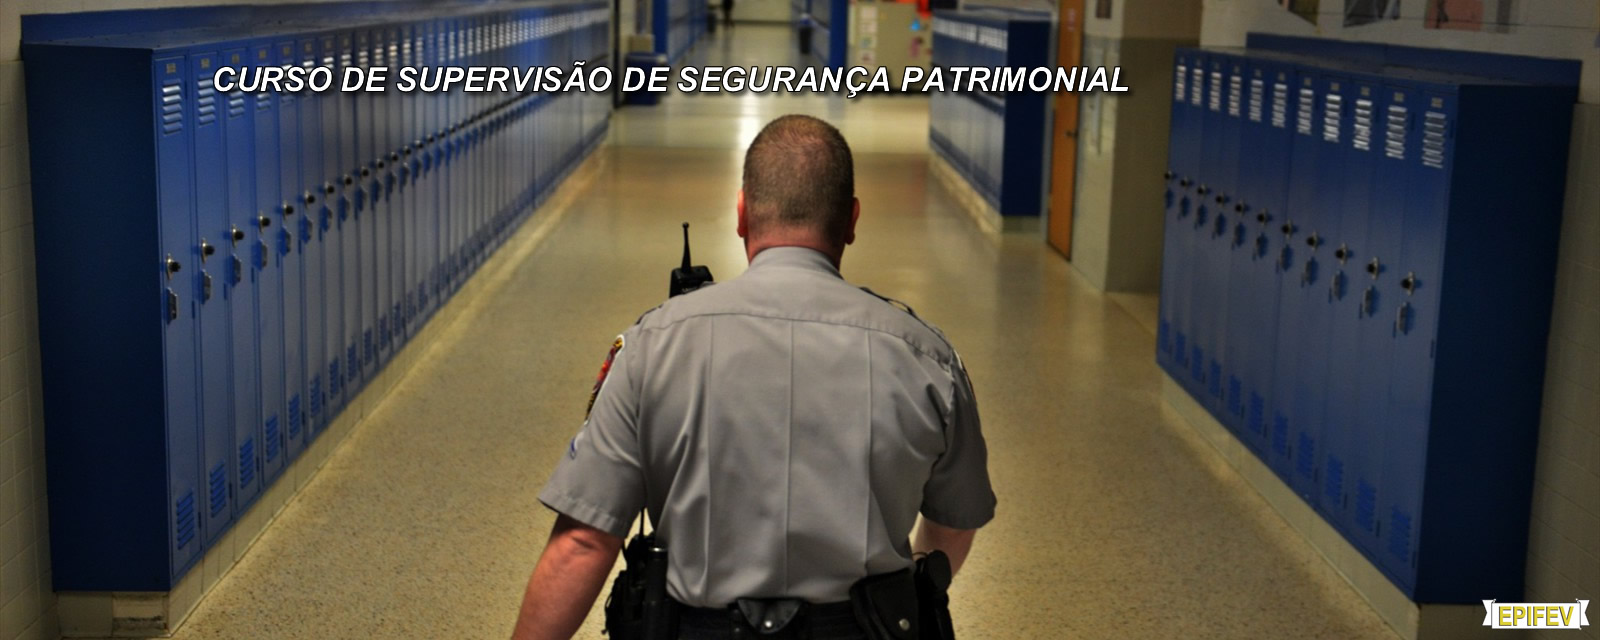 6 - CURSO DE SUPERVISÃƒO DE SEGURANÃ‡A PATRIMONIAL